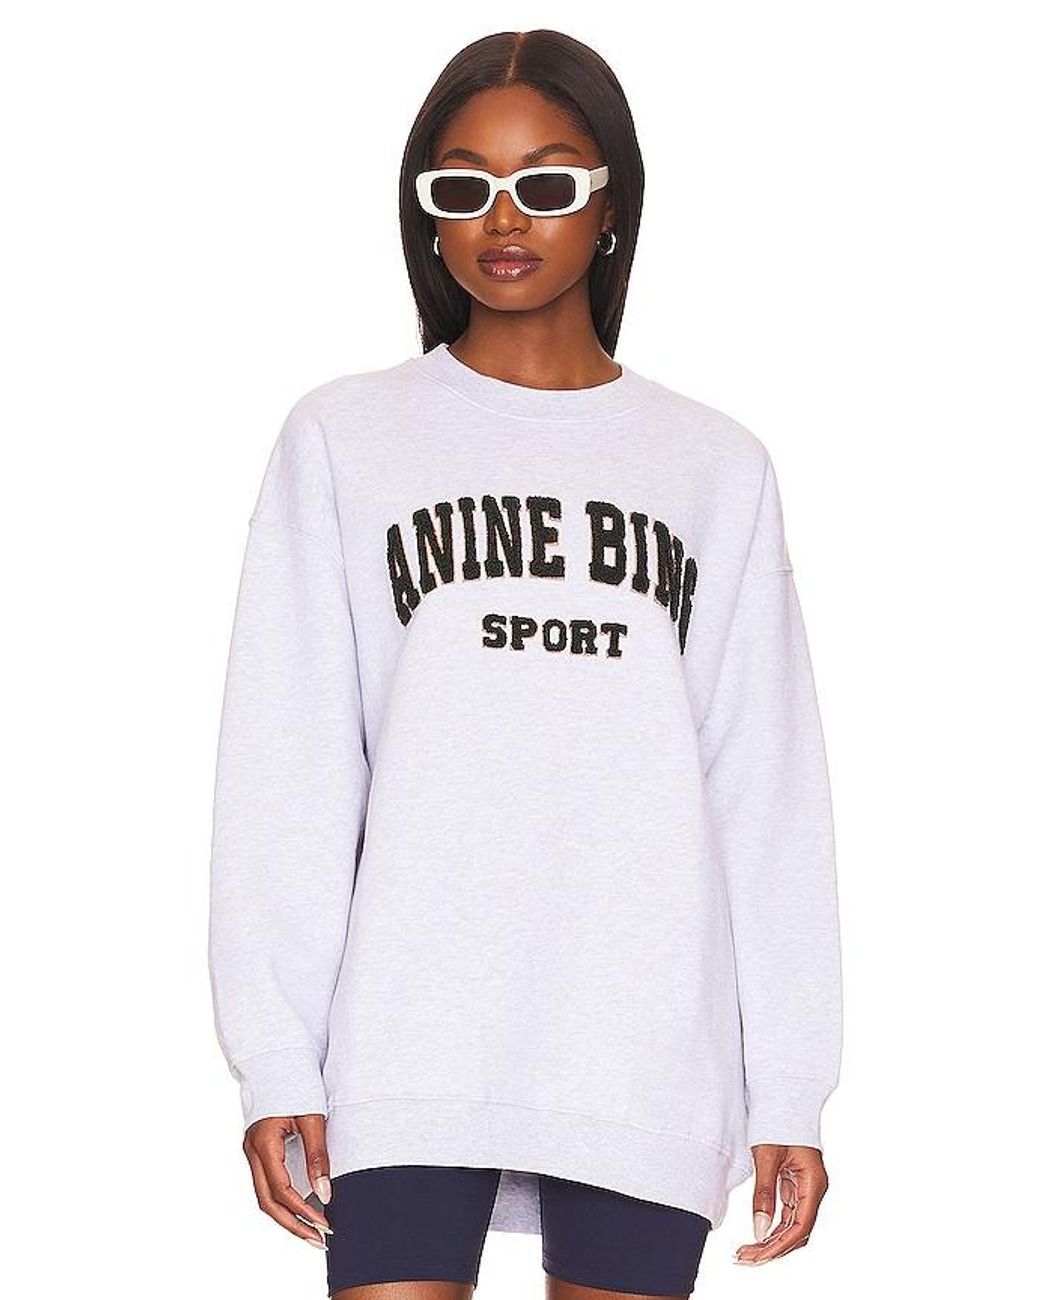 Anine Bing Sport Tyler Sweatshirt in White